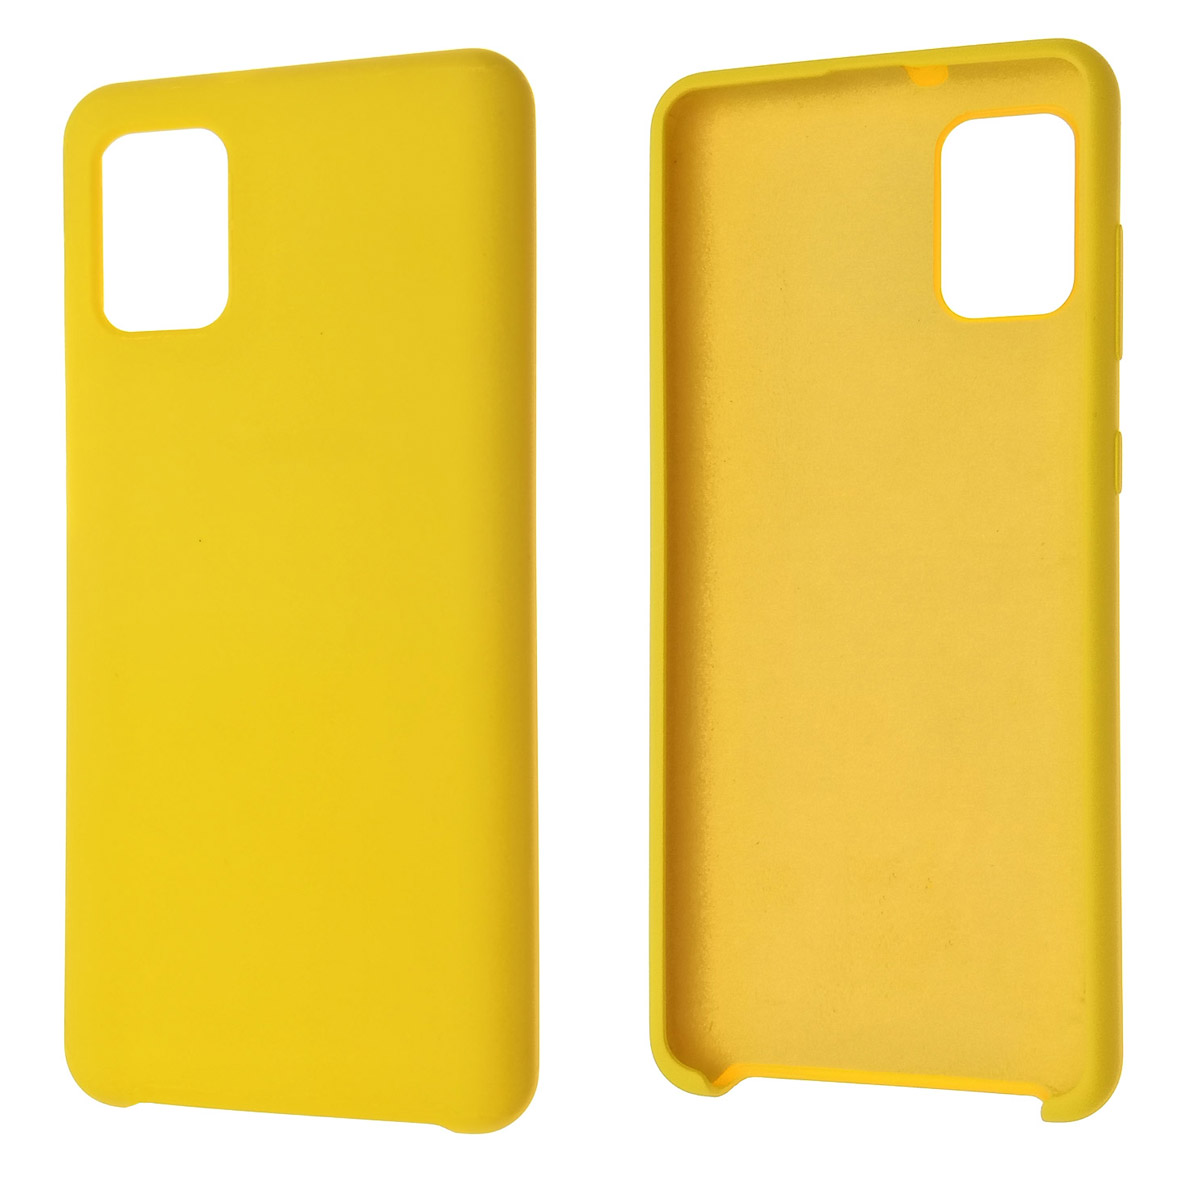 Чехол накладка Silicon Cover для SAMSUNG Galaxy A31 (SM-A315), силикон, бархат, цвет желтый.